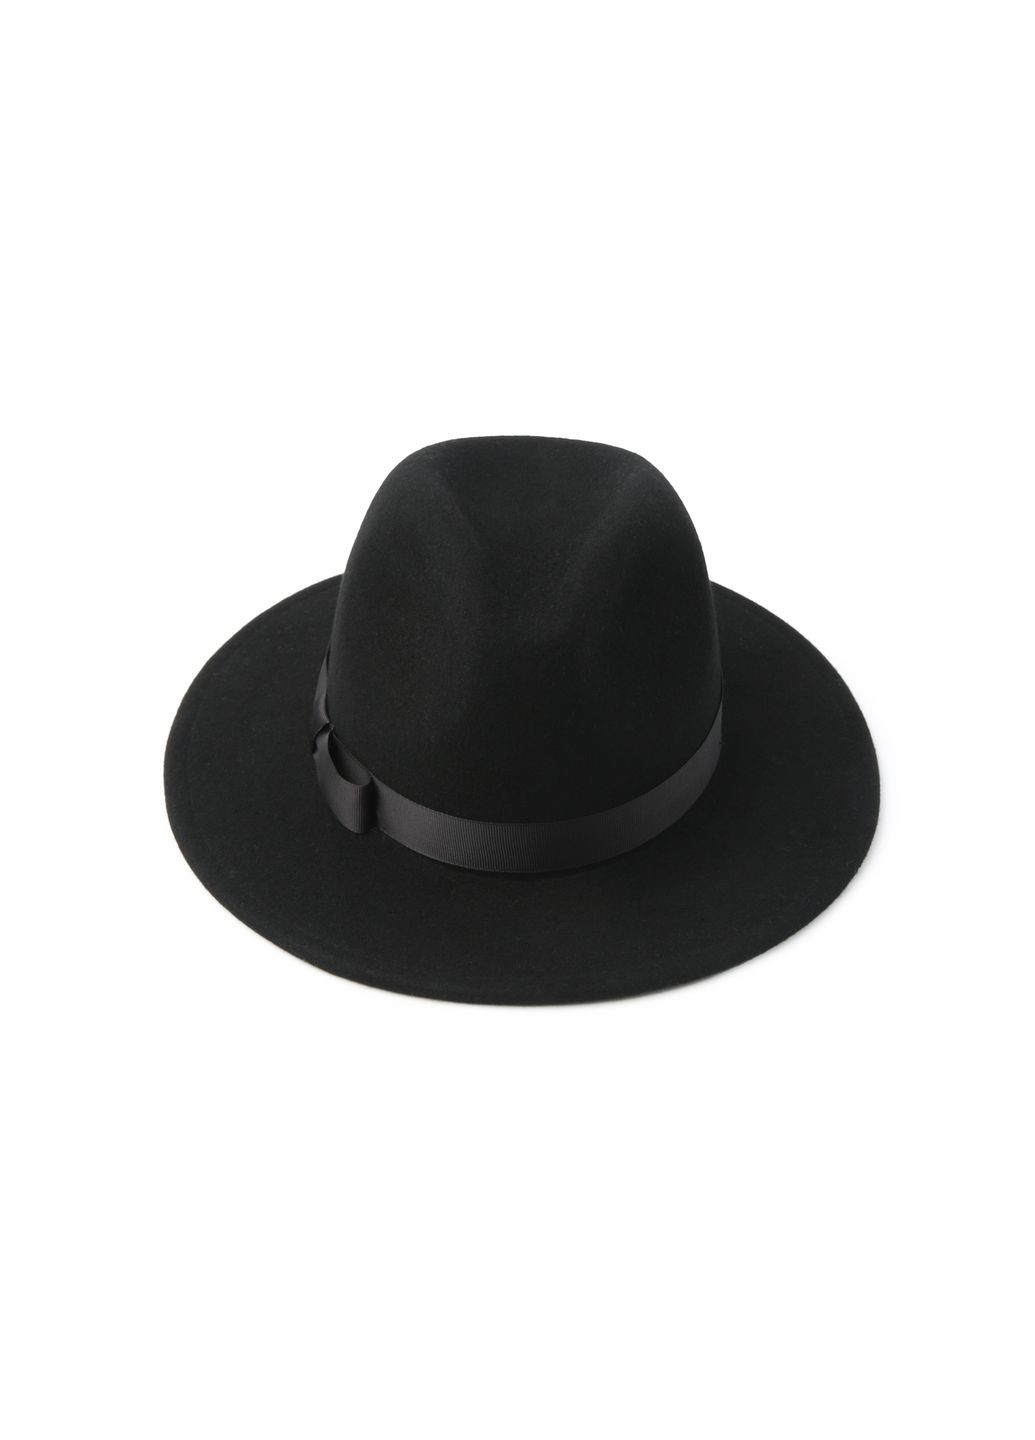 Шляпа федора мужская с лентой фетр черная 659-941 LuckyLOOK 659-941m (289360618)